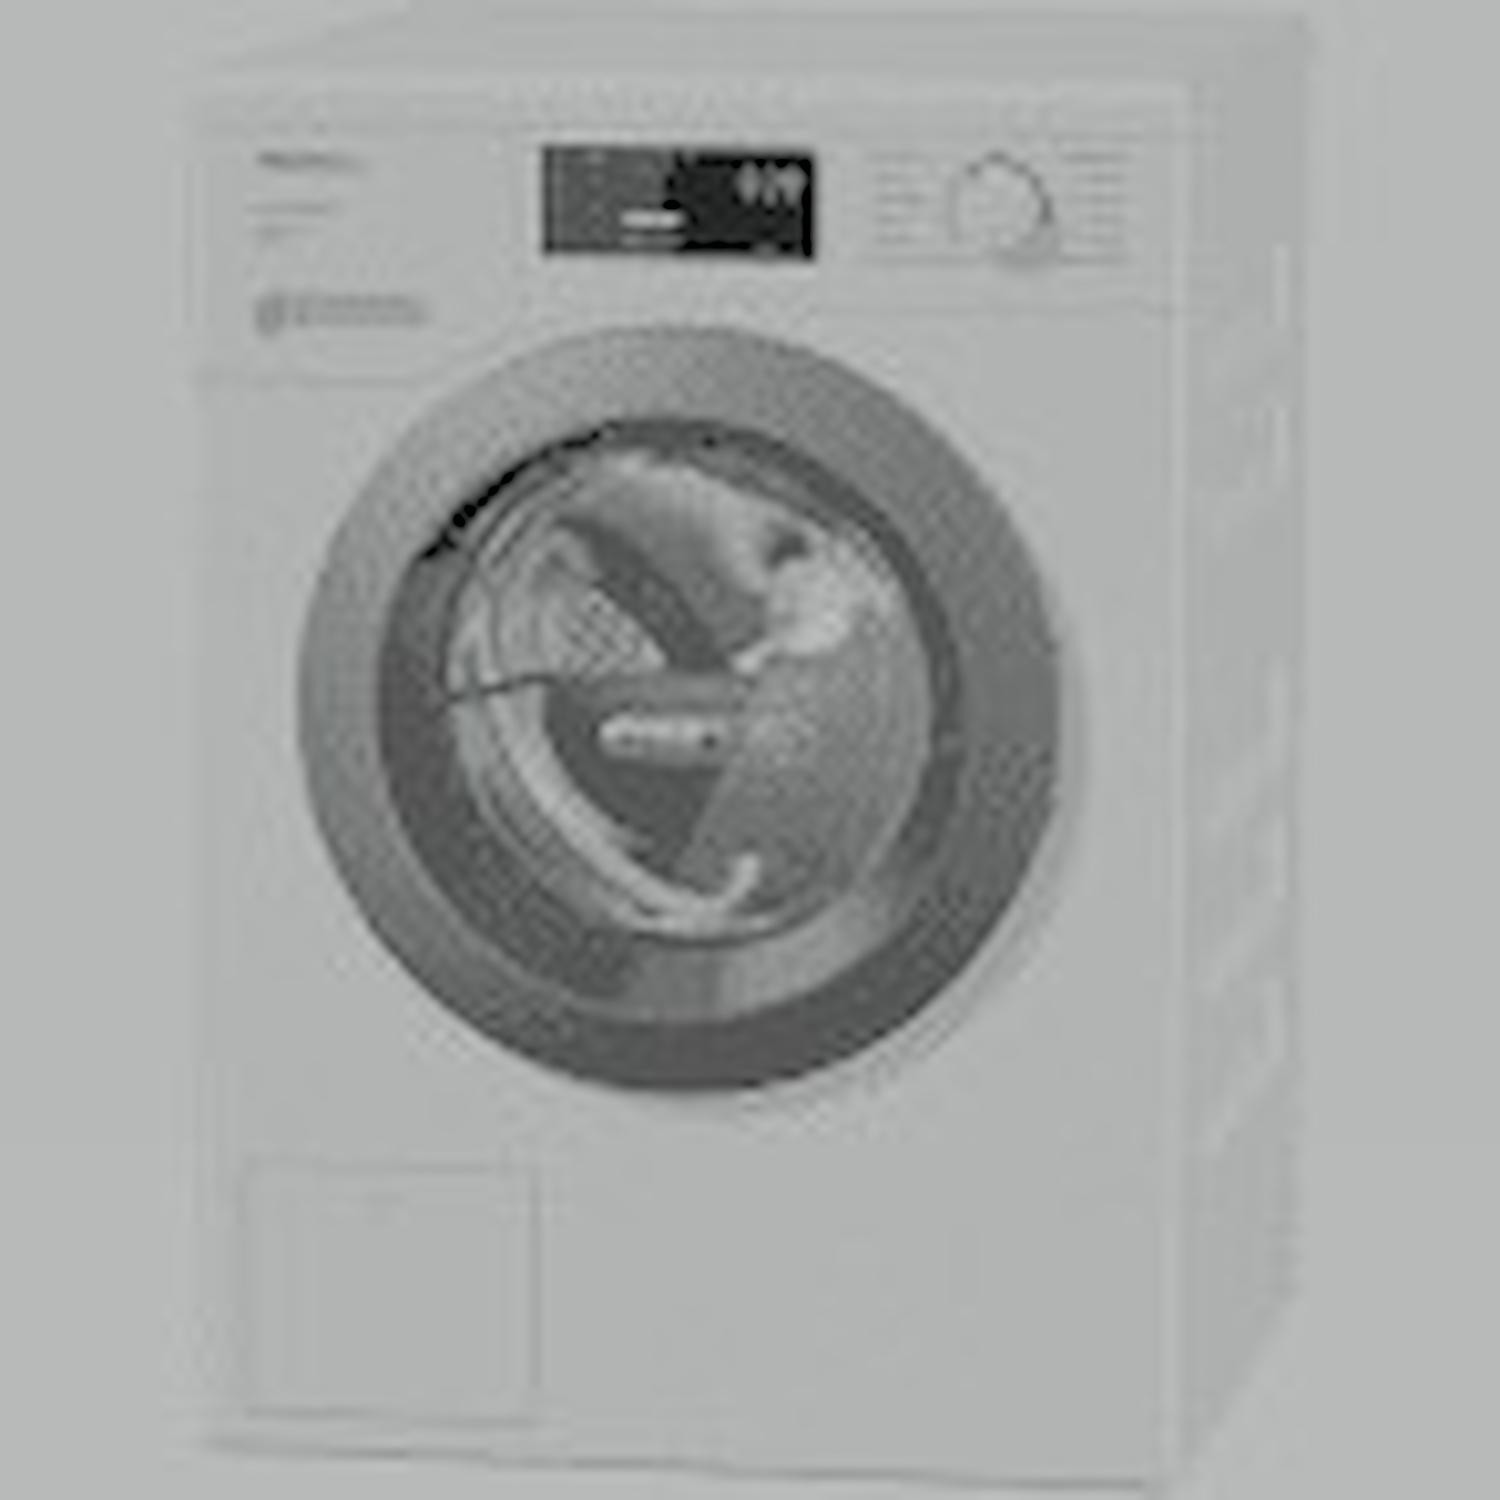 Immagine per Lavasciuga Miele WTD 165 WPM 8kg lavaggio / 5kg asciugatura da DIMOStore